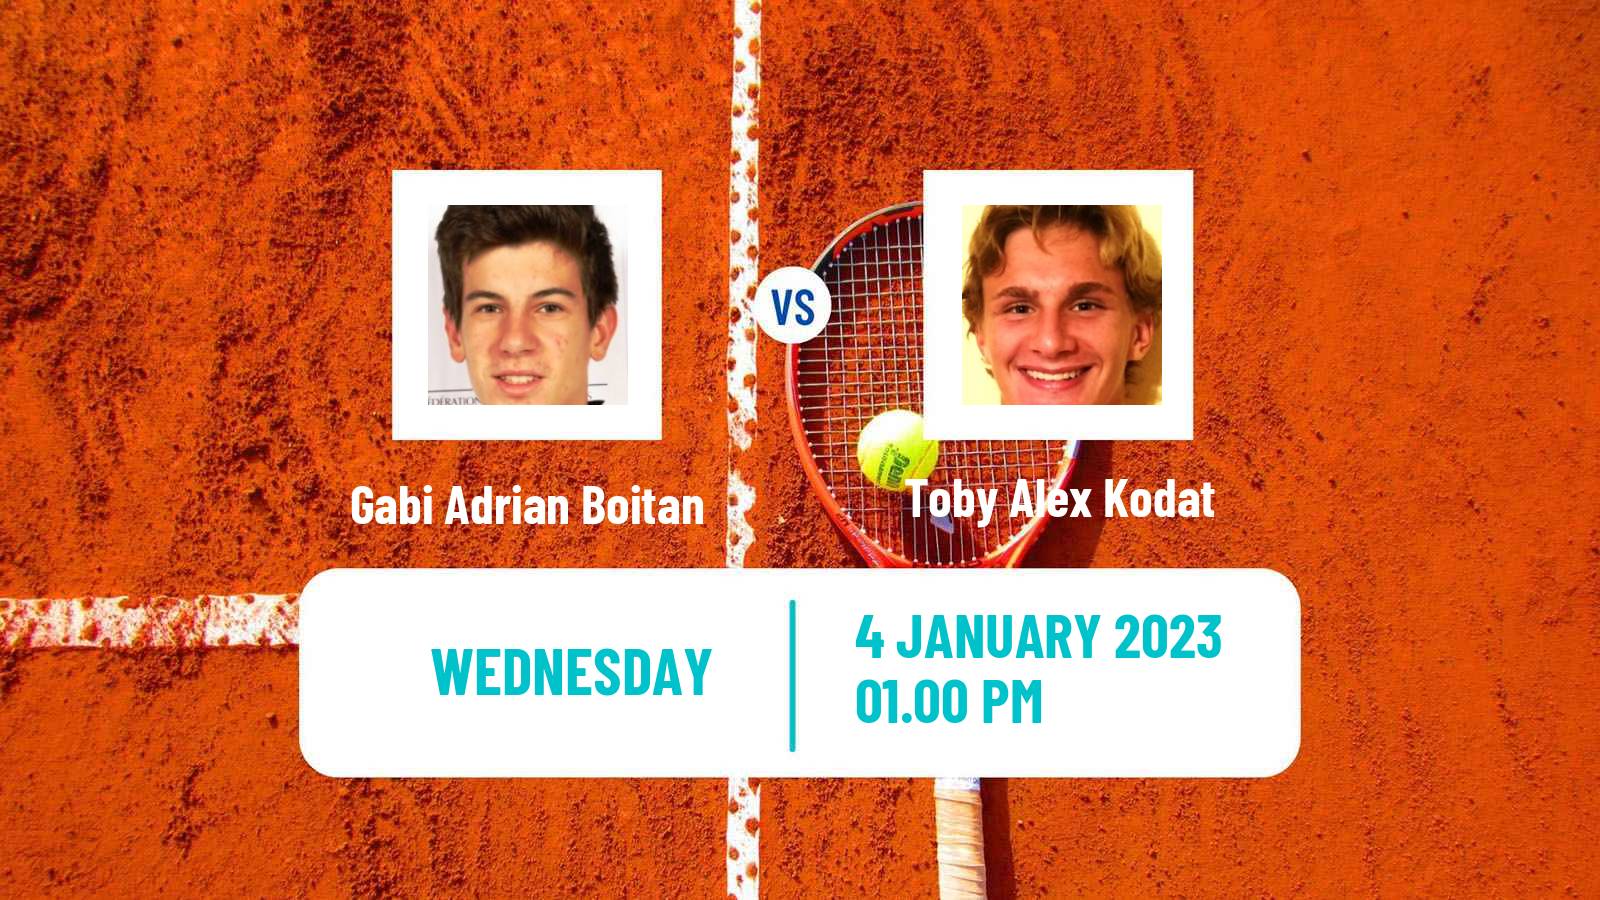 Tennis ITF Tournaments Gabi Adrian Boitan - Toby Alex Kodat